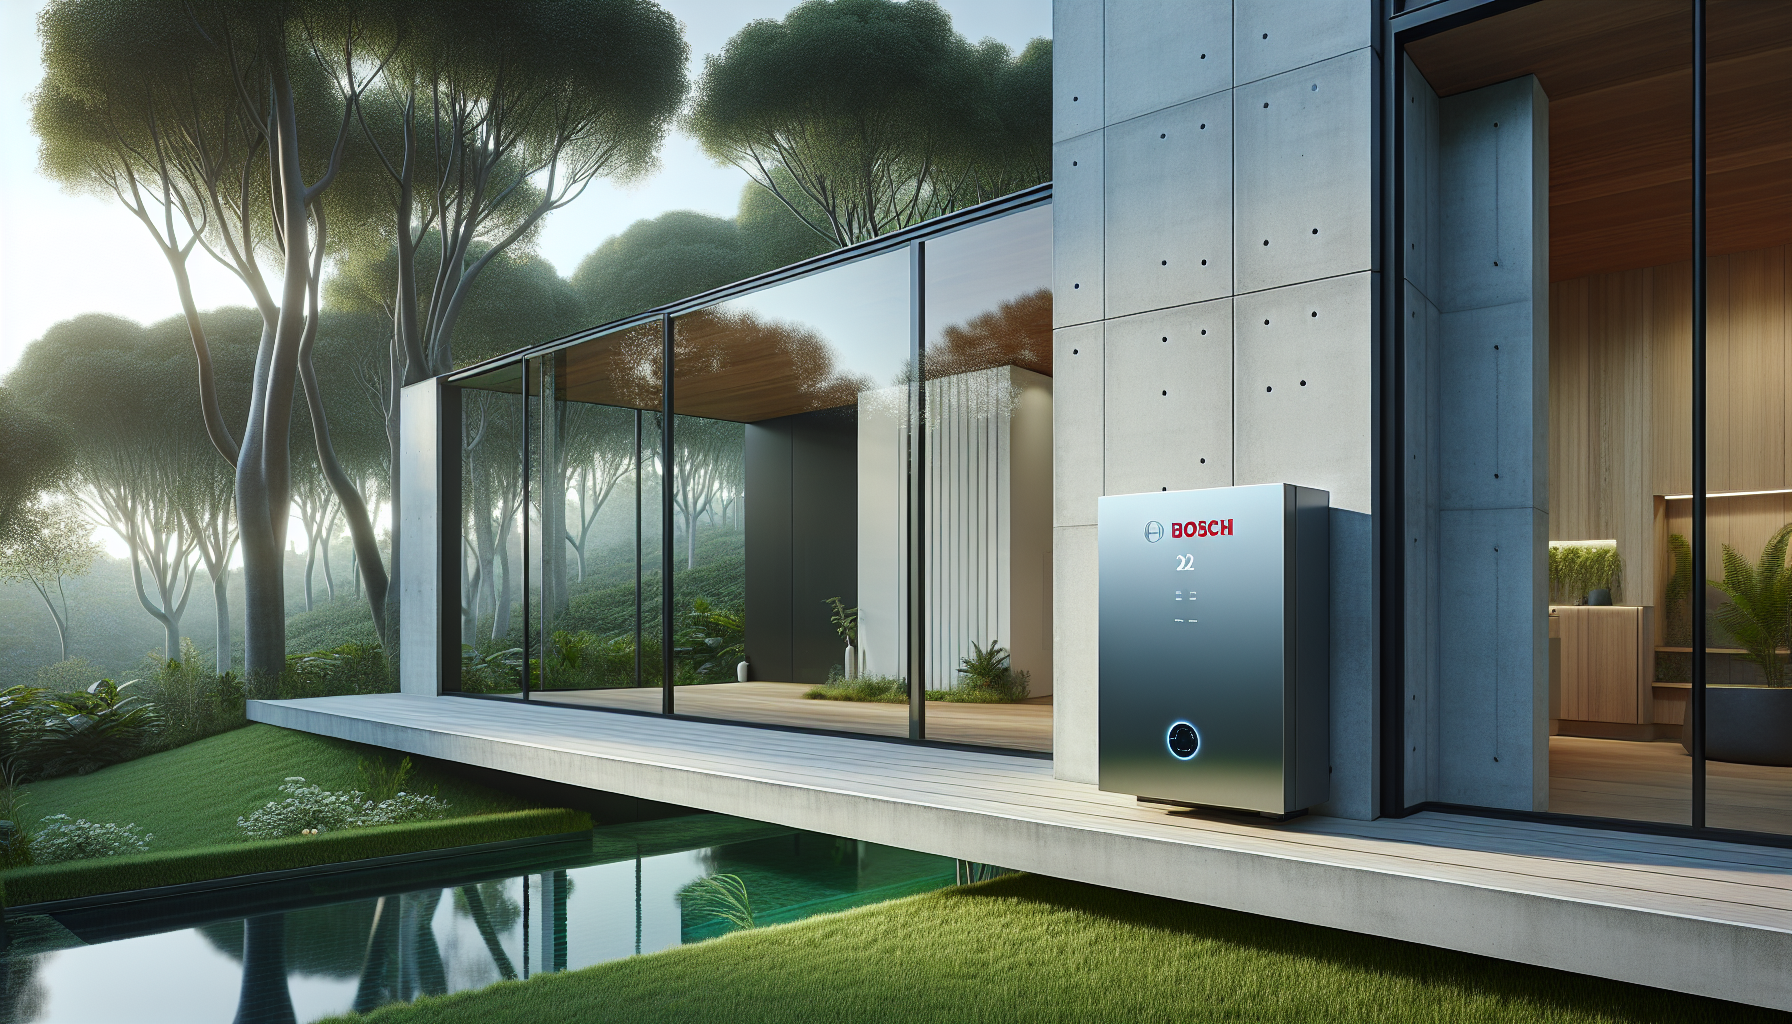 Bosch hot water system in a modern home